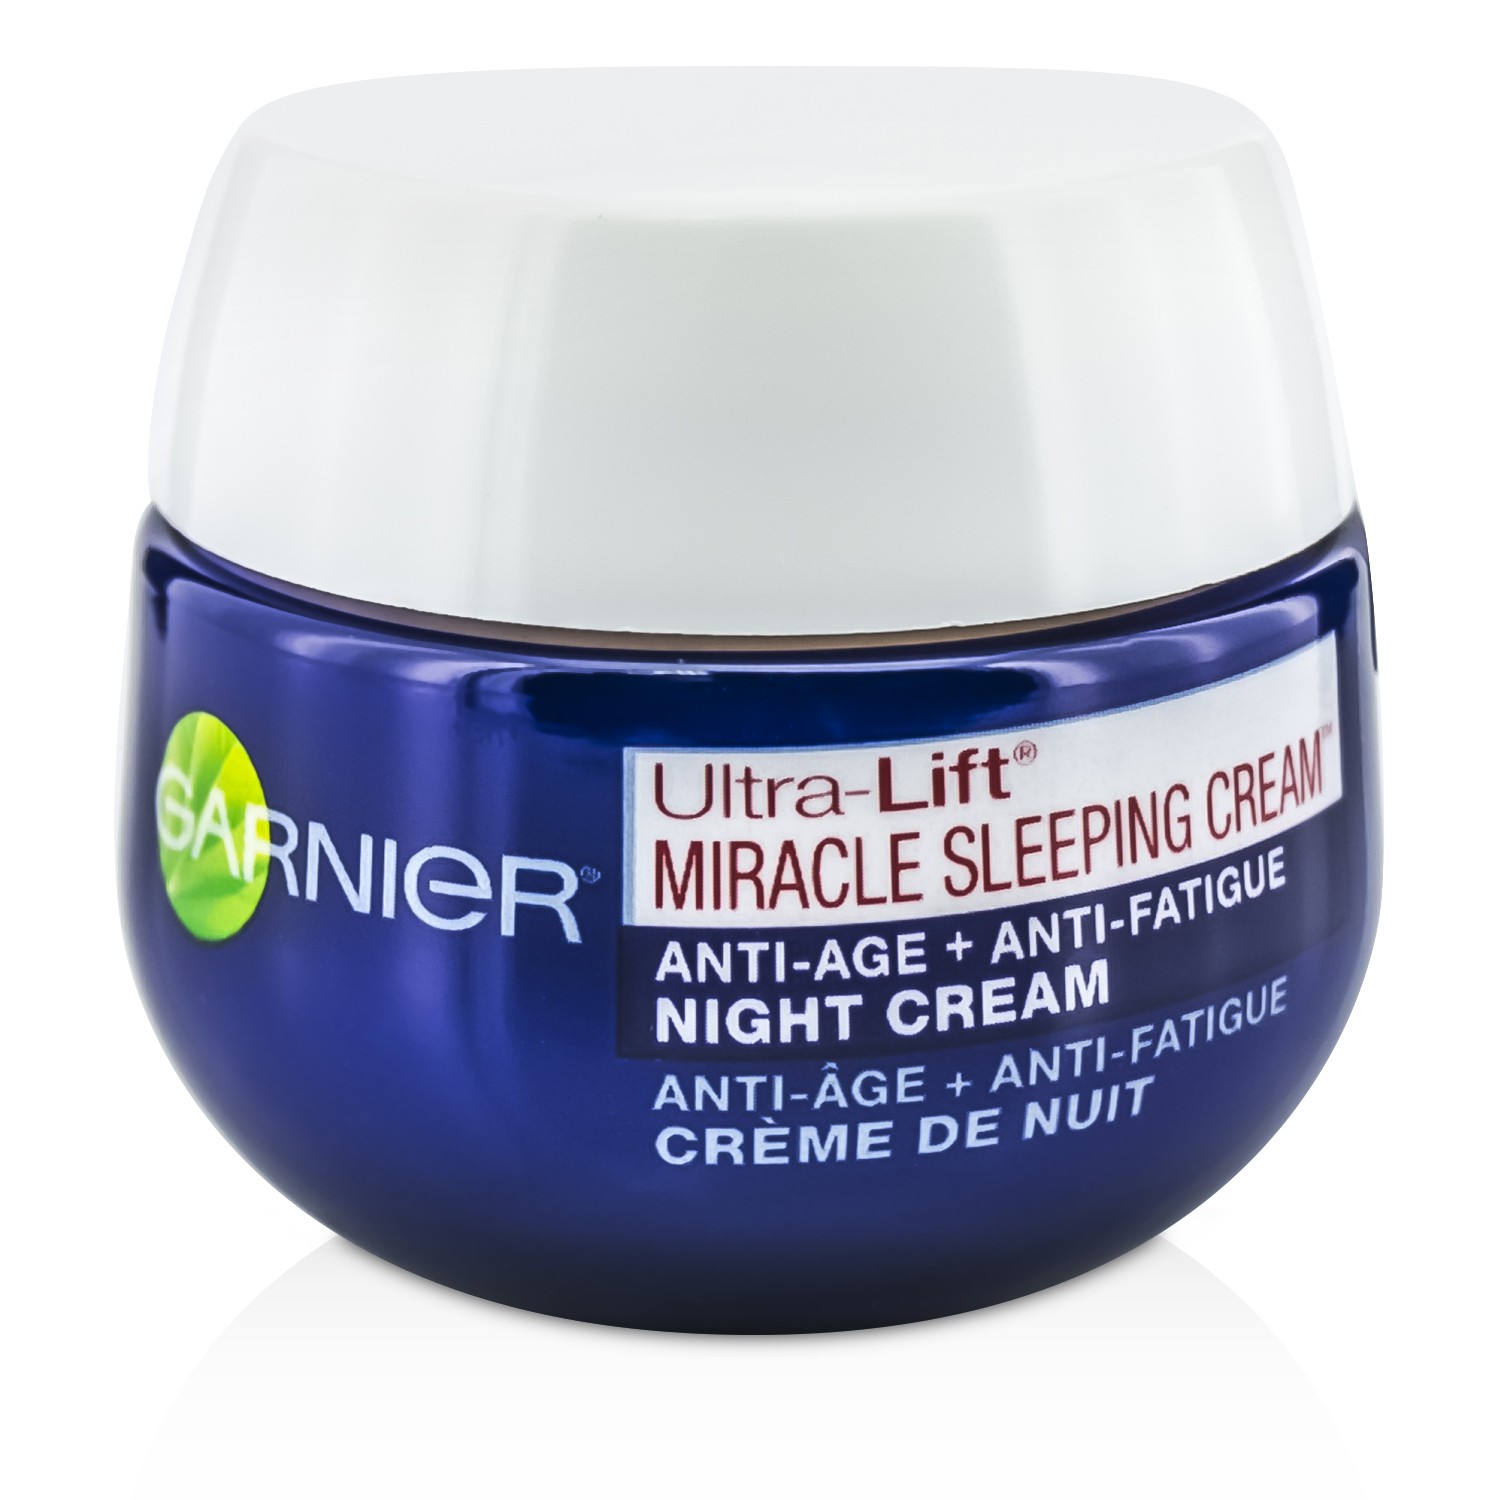 Garnier Ultra-Lift Miracle Sleeping Cream 48g/1.7oz